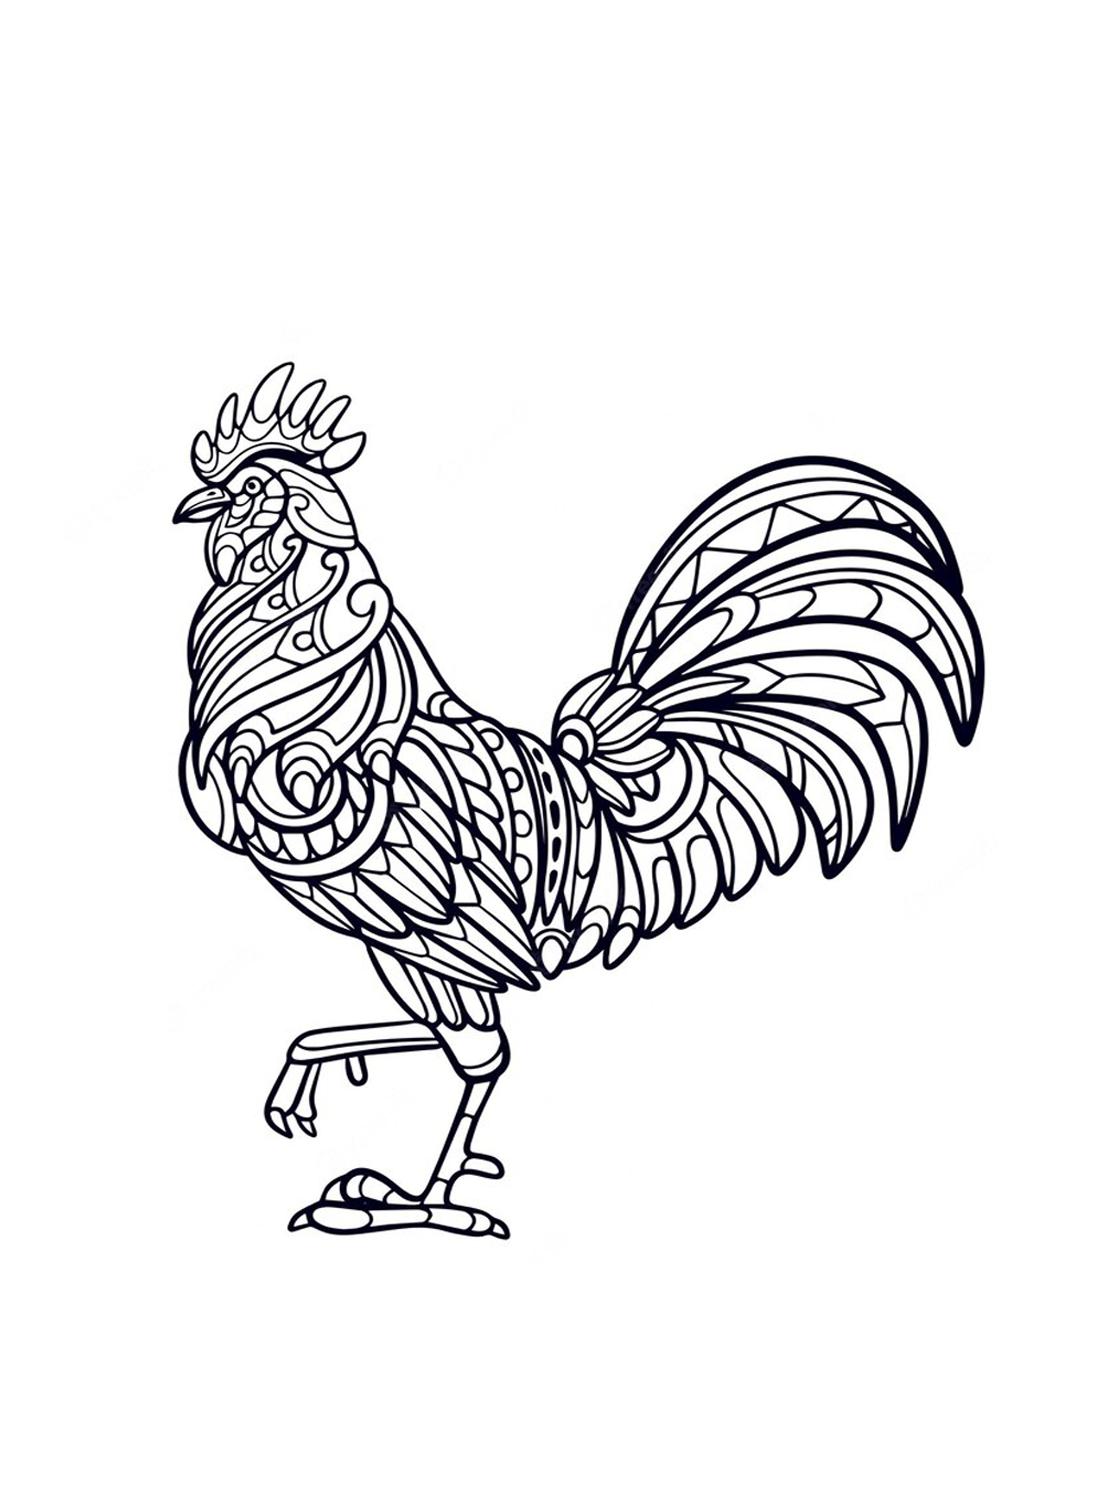 Un motif coq de chez Rooster